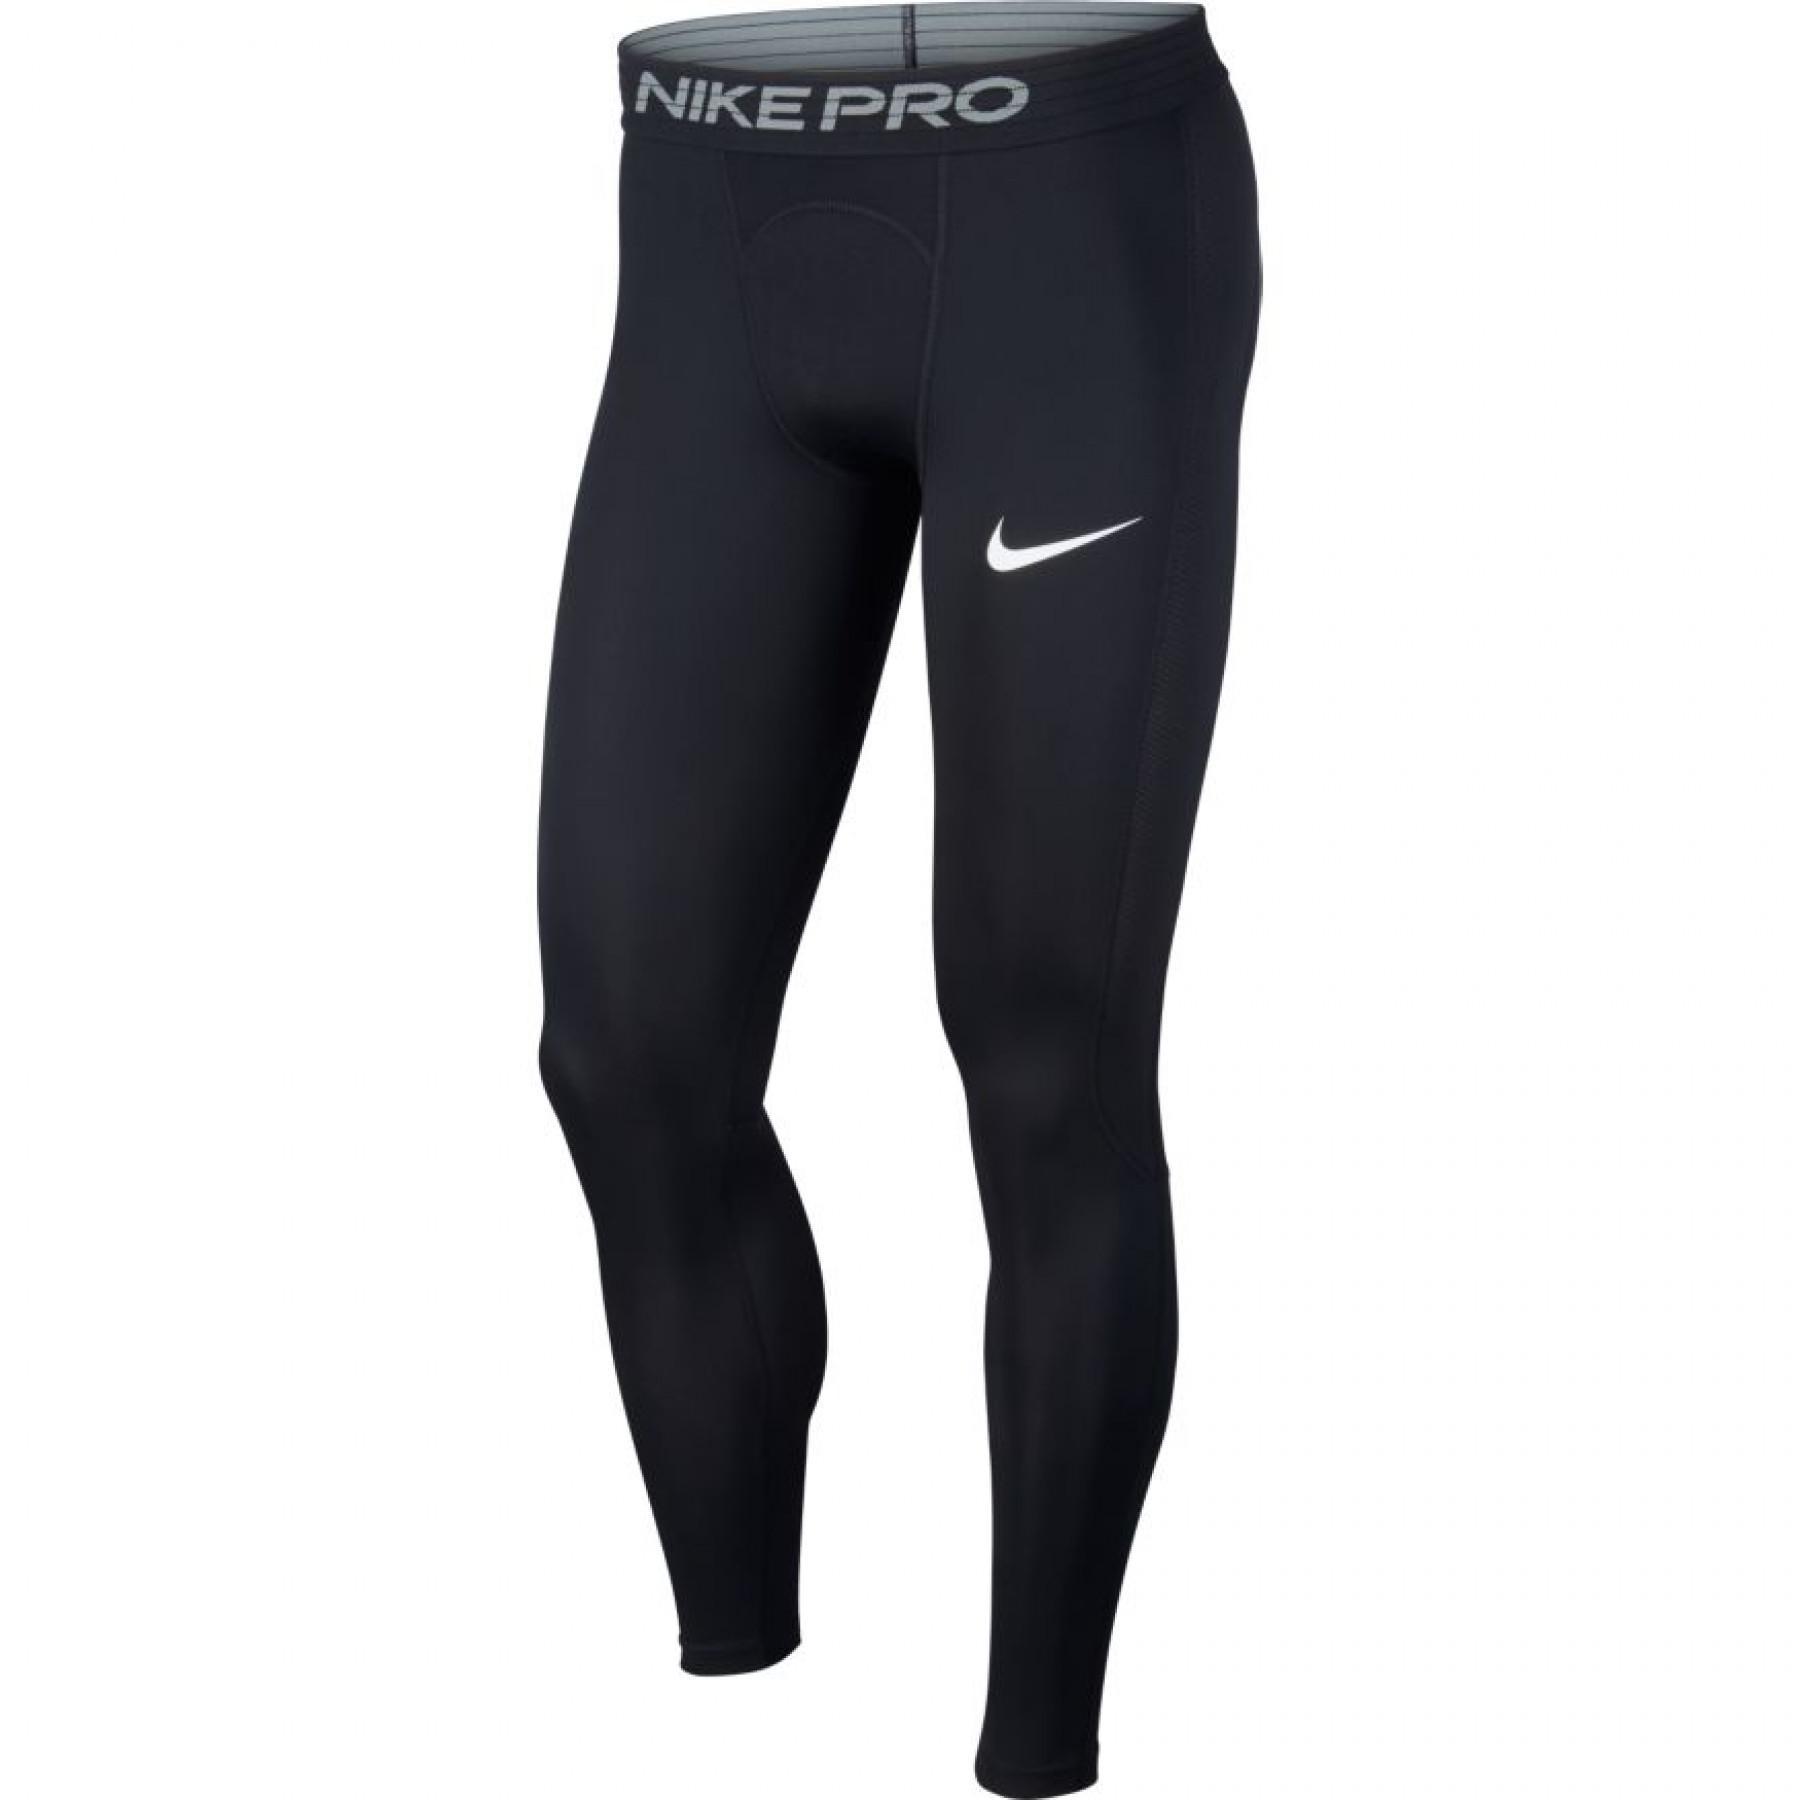 Compression Pants Nike Pro - Textile - Handball wear